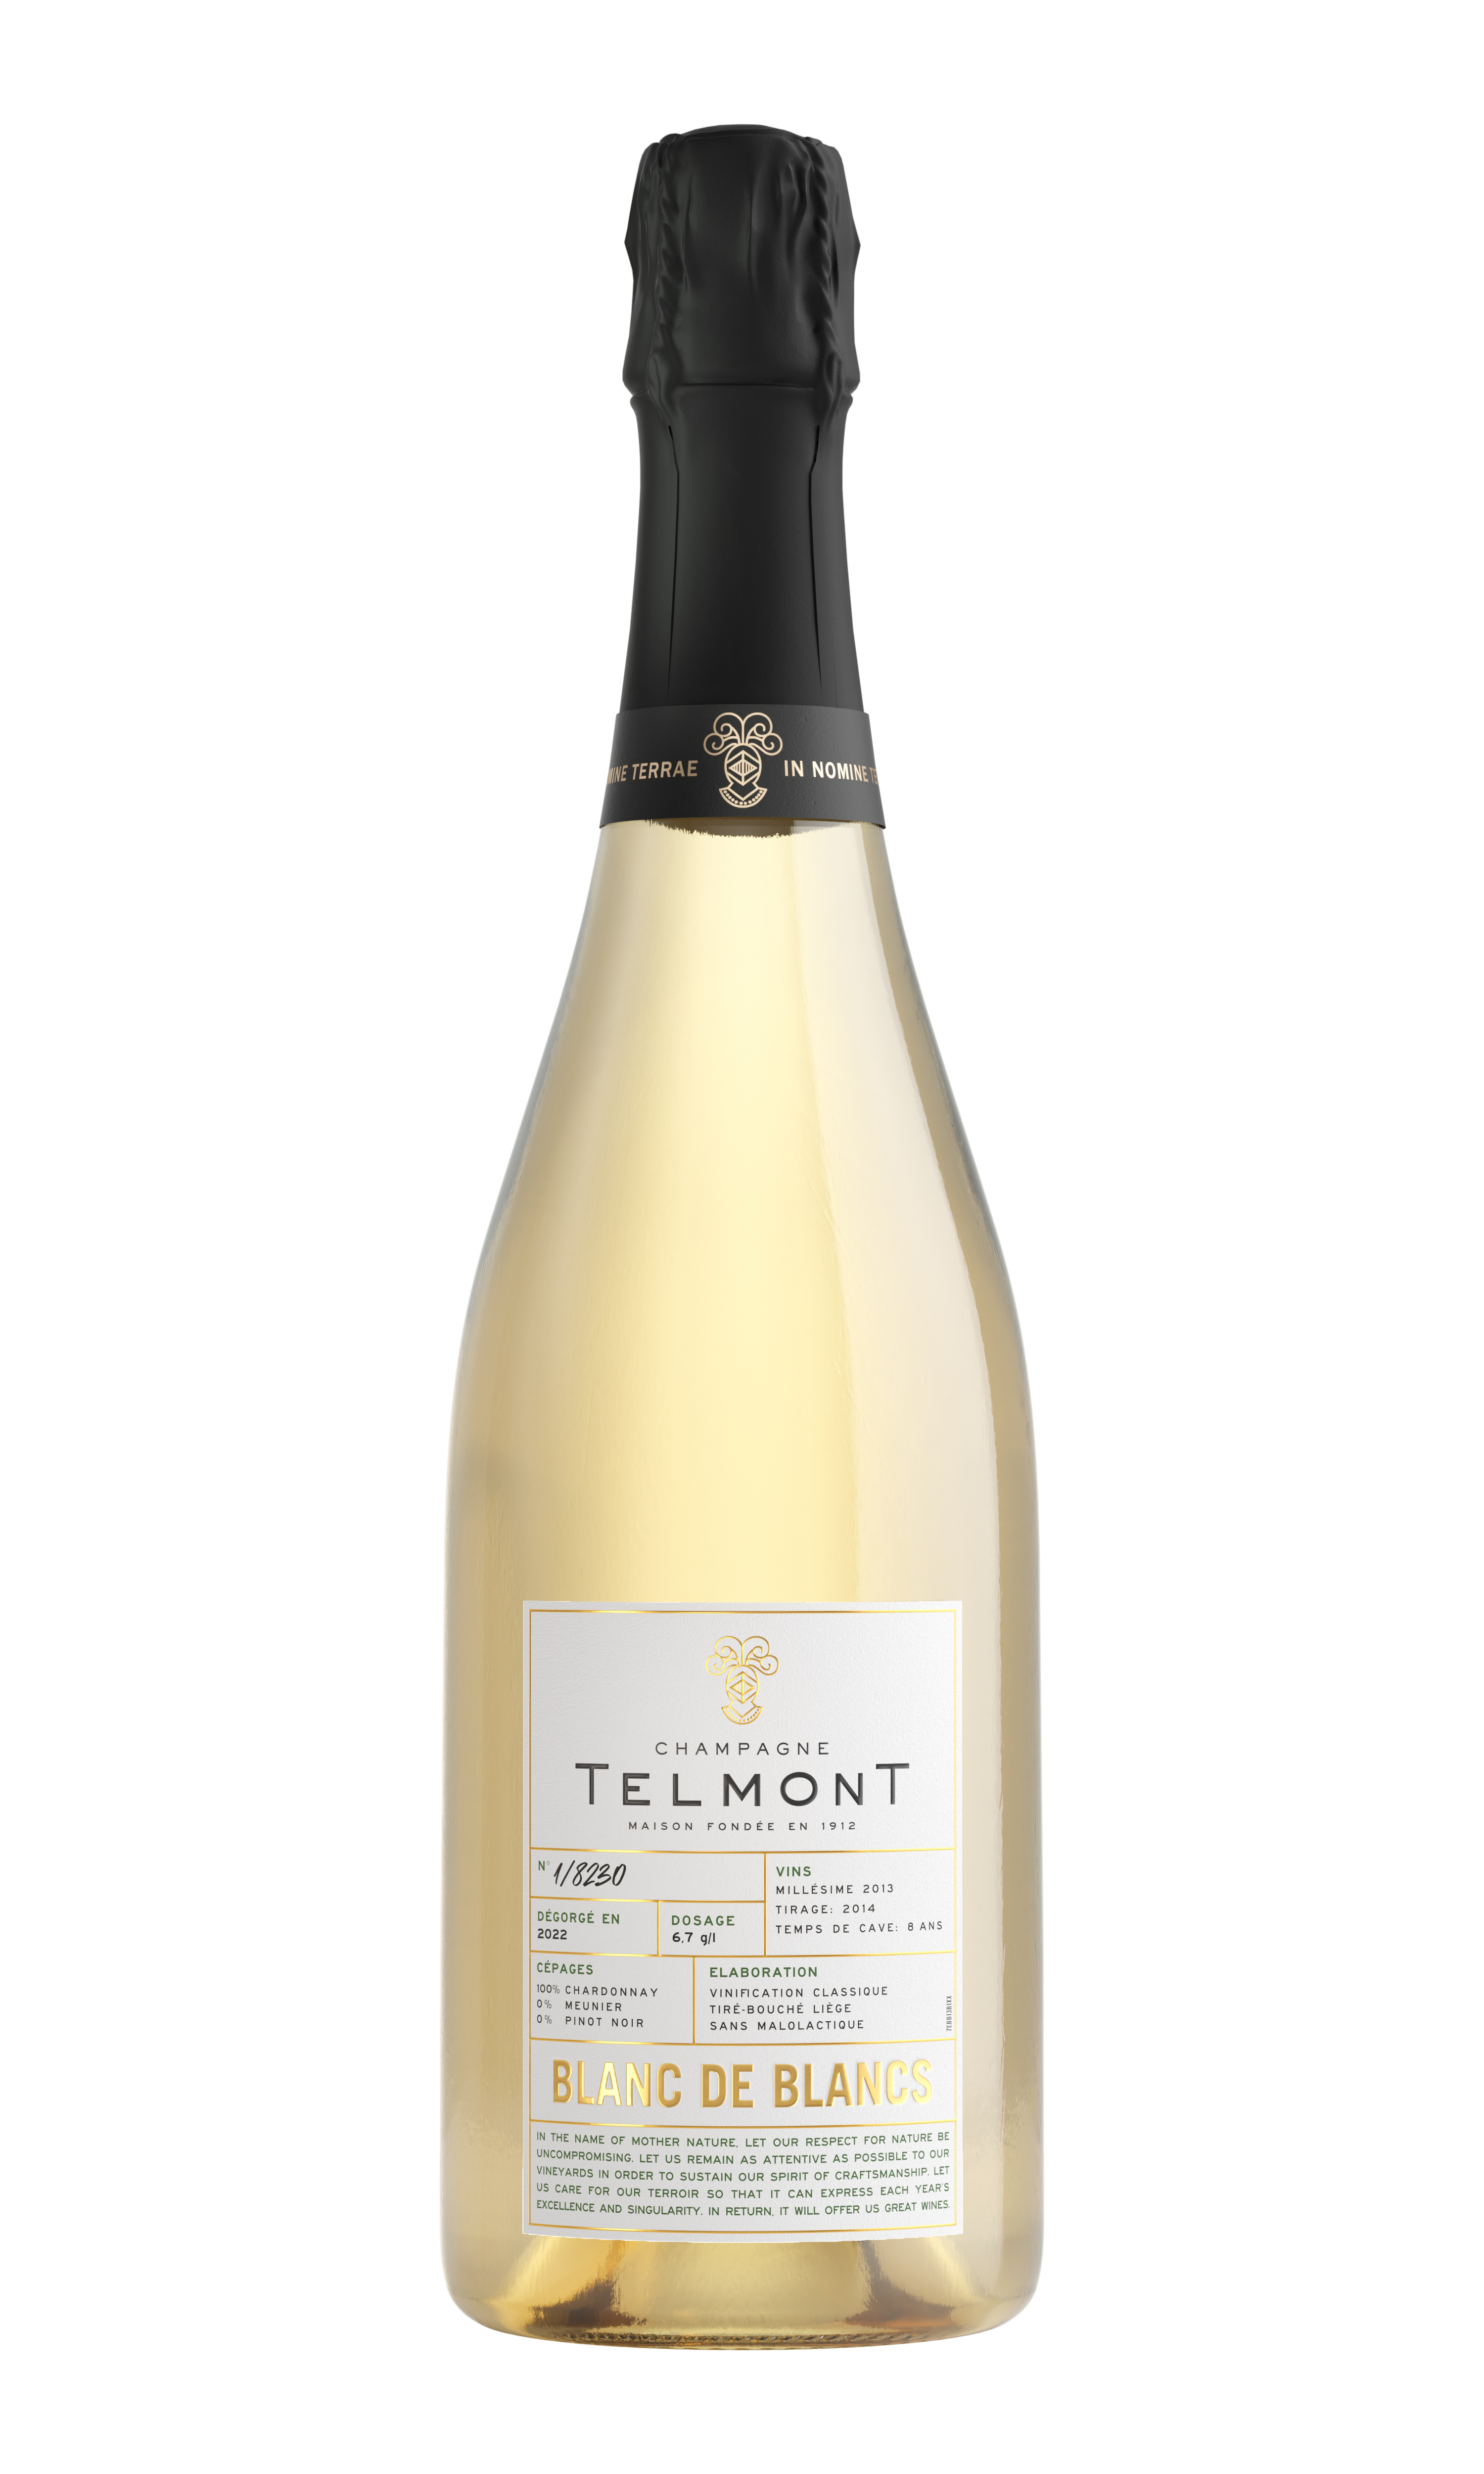 A packshot of a bottle of Champagne Telmont Blanc de Blancs